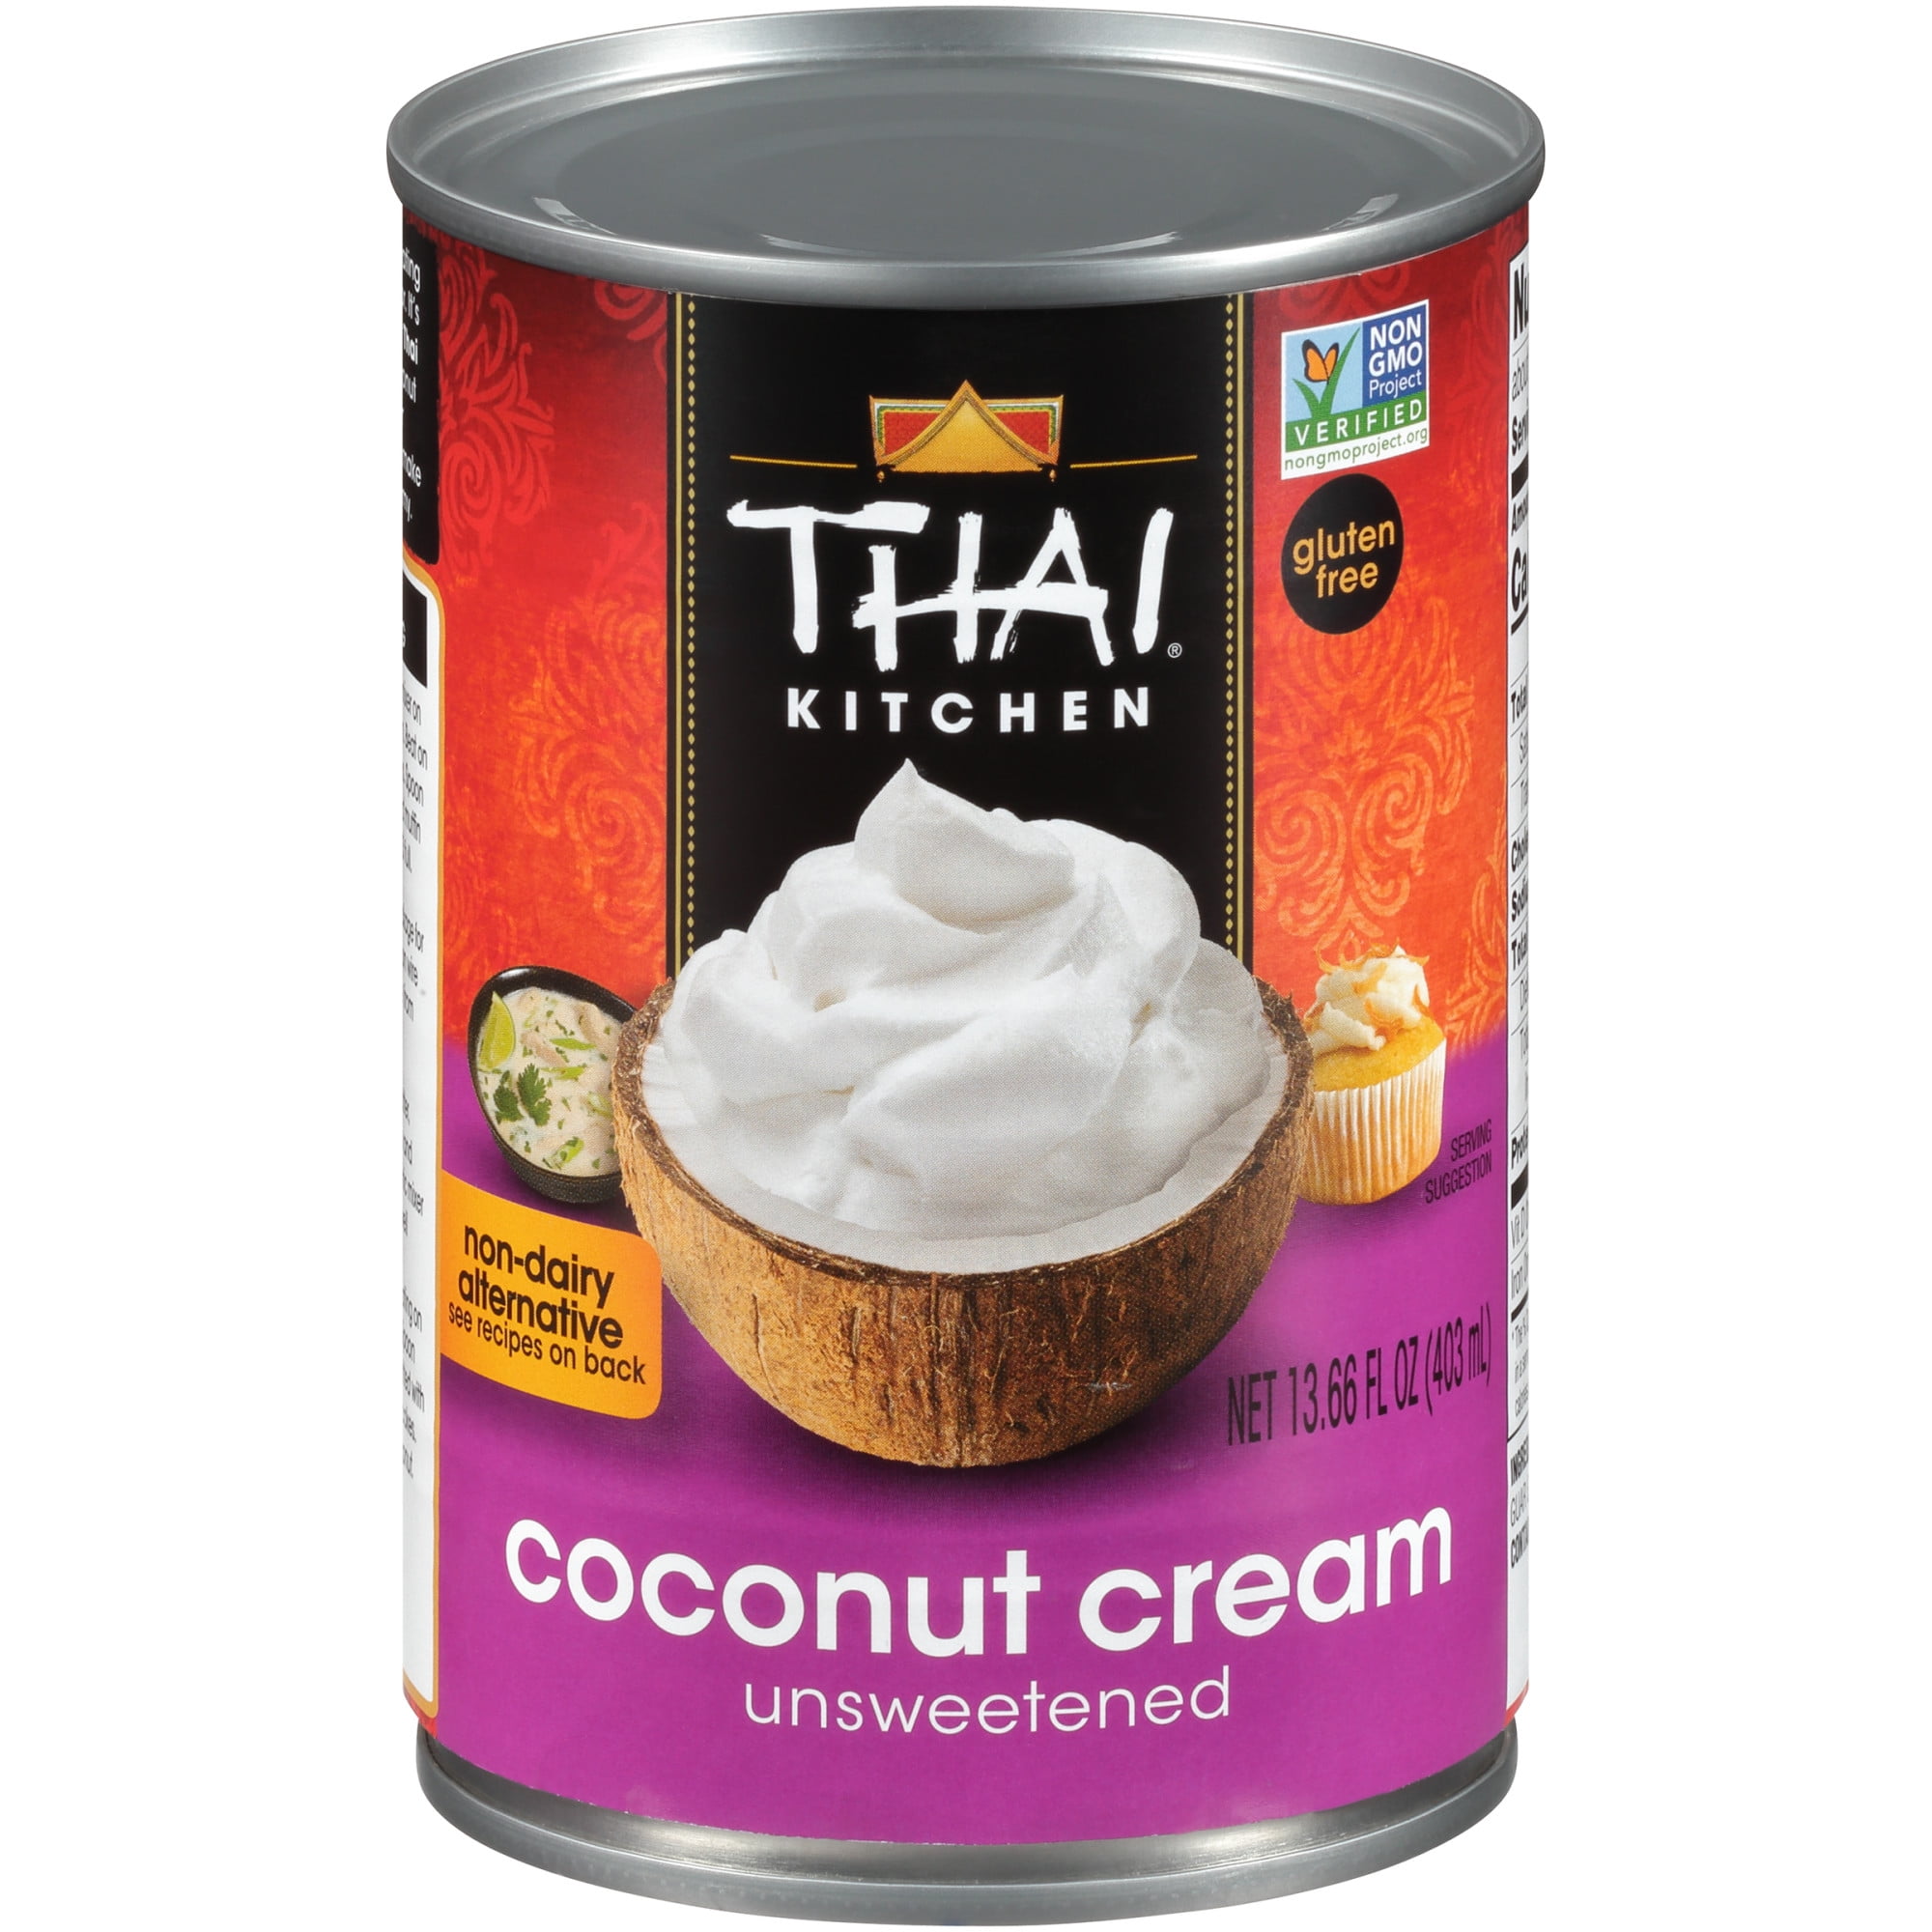 Thai Kitchen Gluten Free Unsweetened Coconut Cream, 13.66 fl oz - image 1 of 12